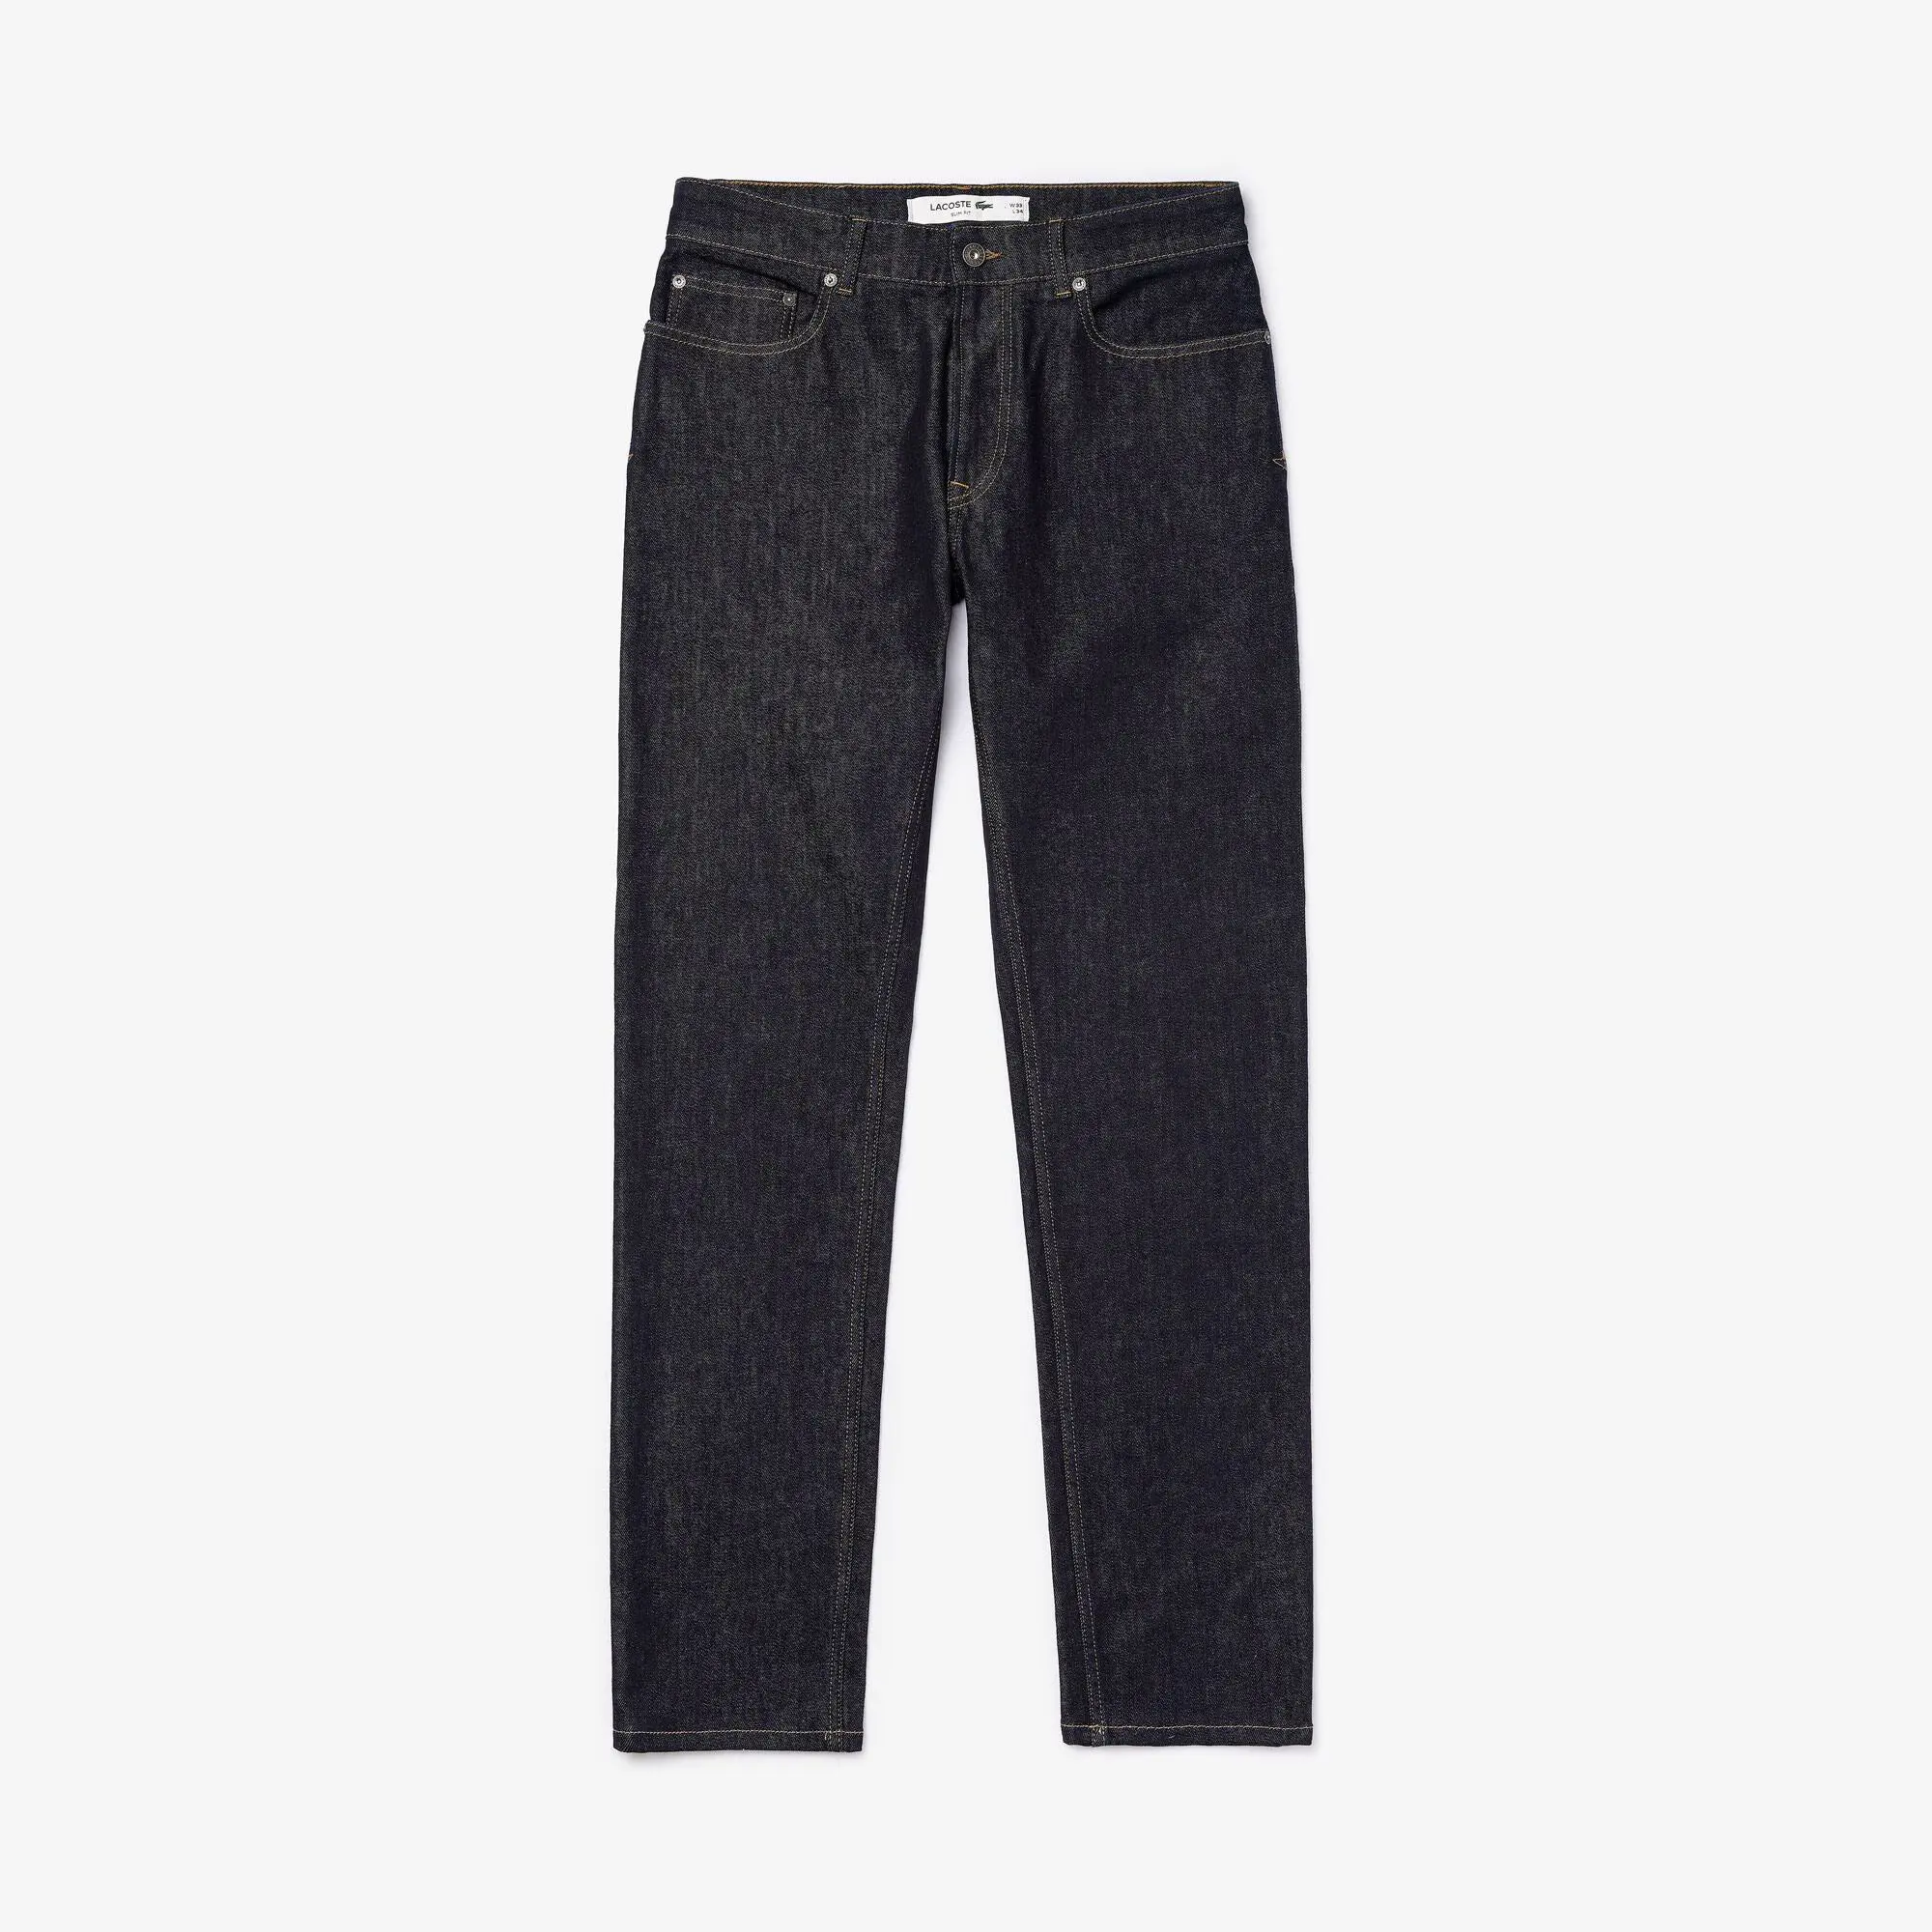 Lacoste Jeans slim fit con cinco bolsillos en denim stretch para hombre. 2